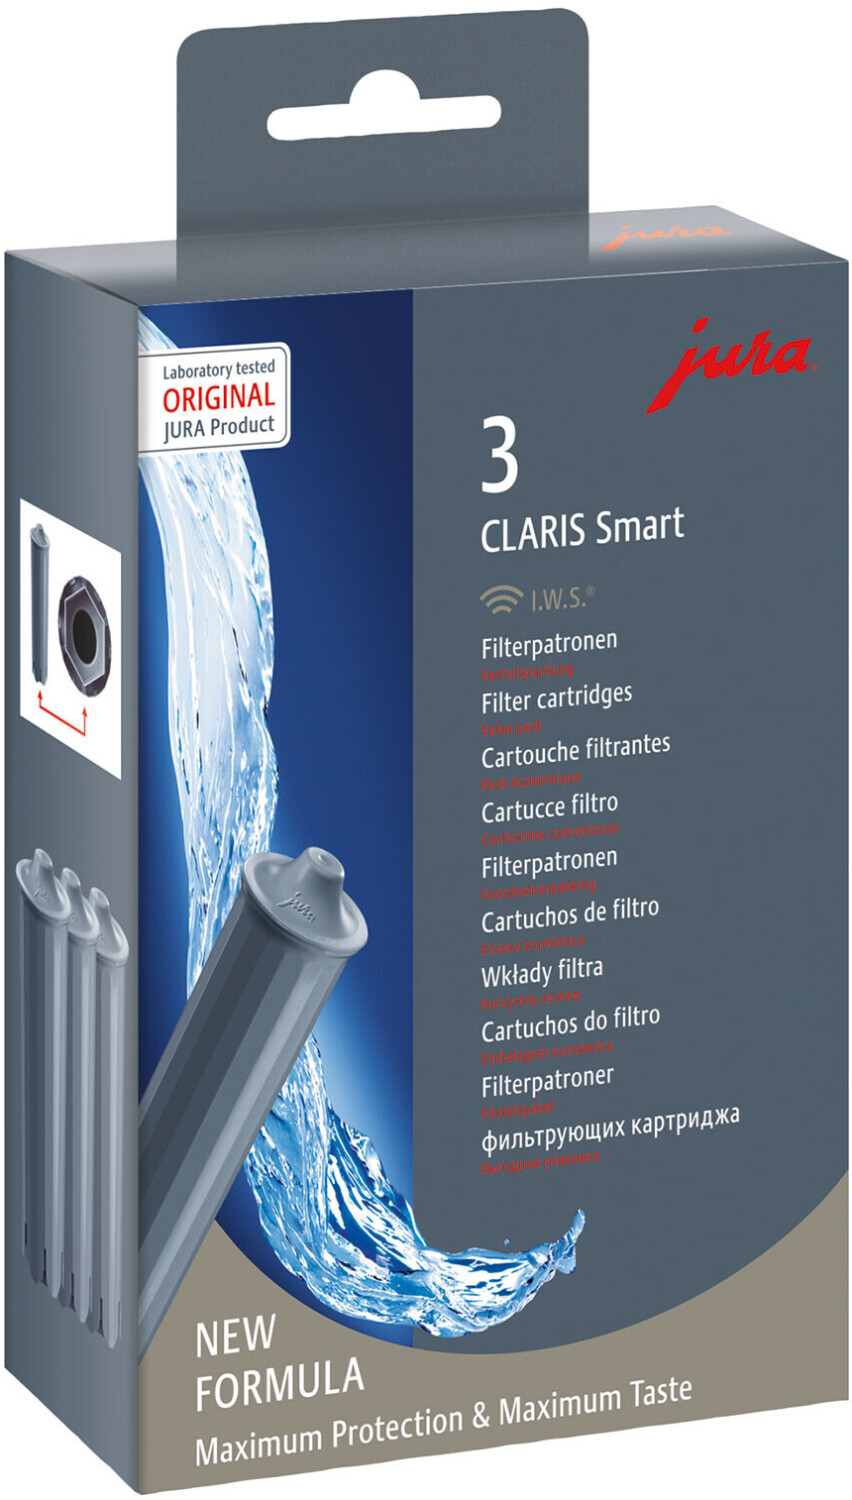 Jura Claris Smart (3 pcs) - acheter sur Galaxus